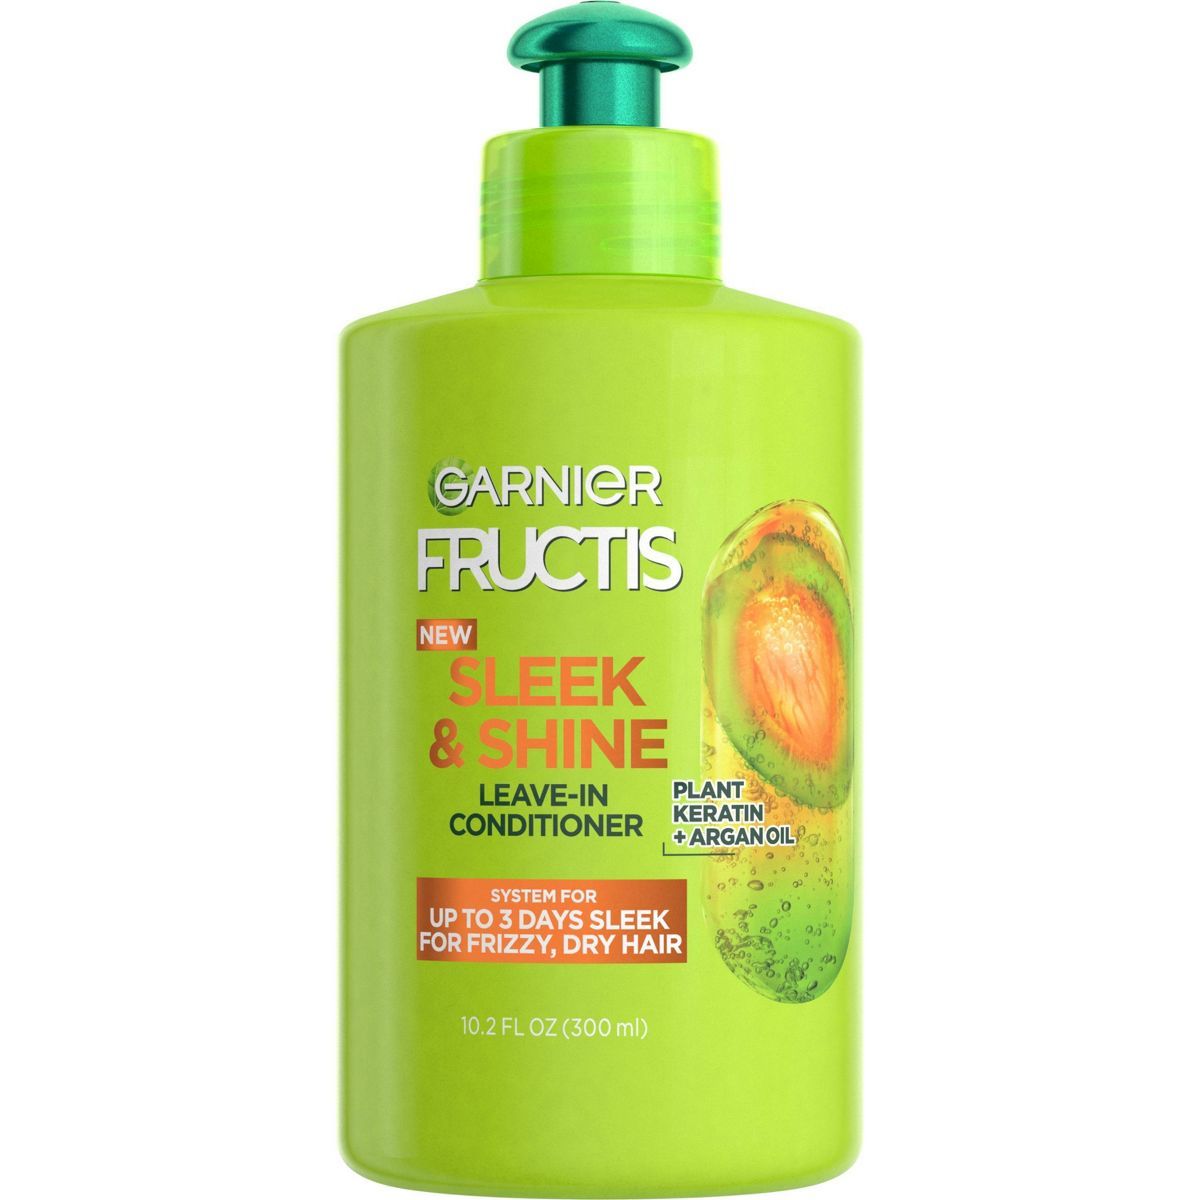 Garnier Fructis Sleek & Shine Smooth Leave-in Conditioning Cream | Target